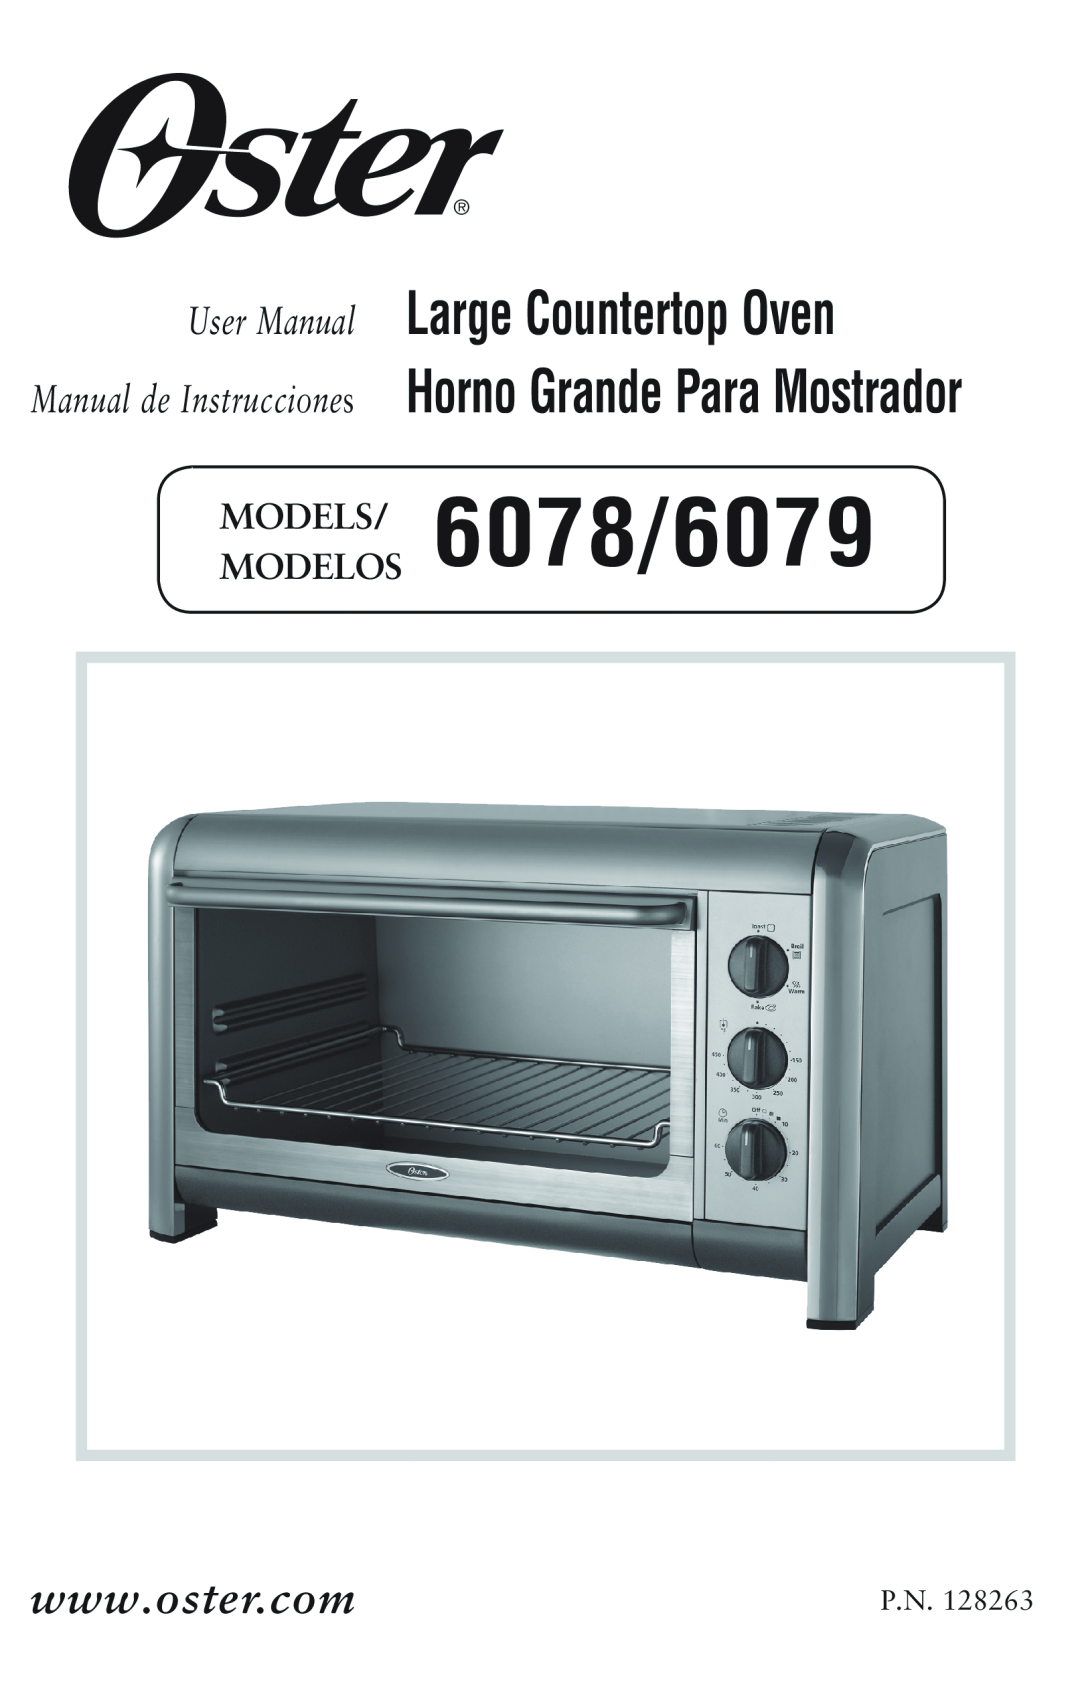 Oster 128263 user manual Large Countertop Oven Horno Grande Para Mostrador, 6078/6079, Manual de Instrucciones 